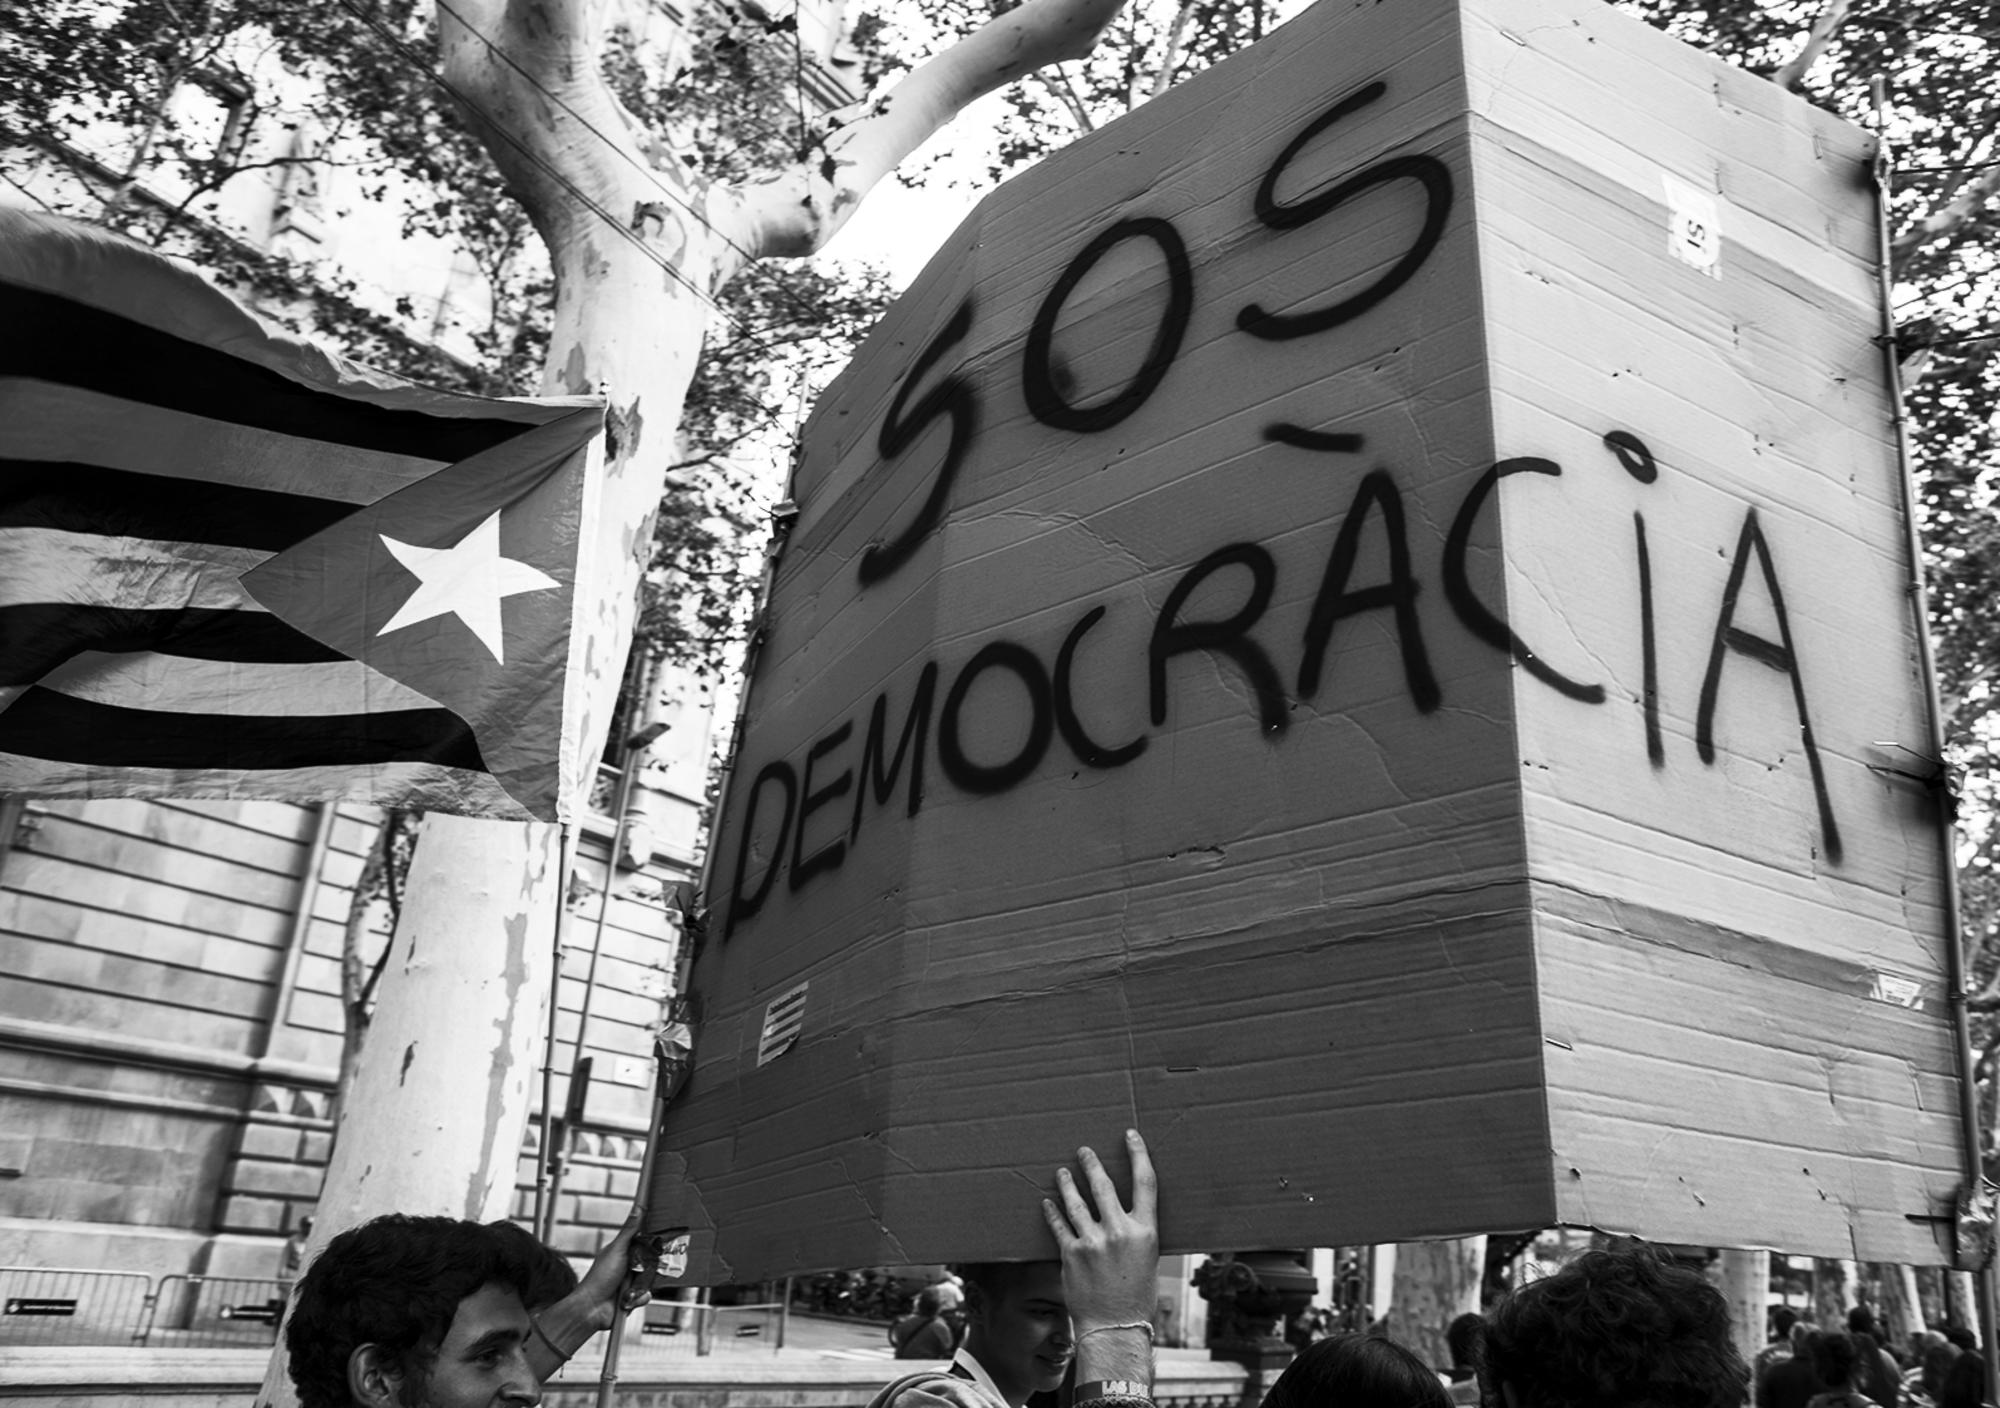 huelga general catalana democracia